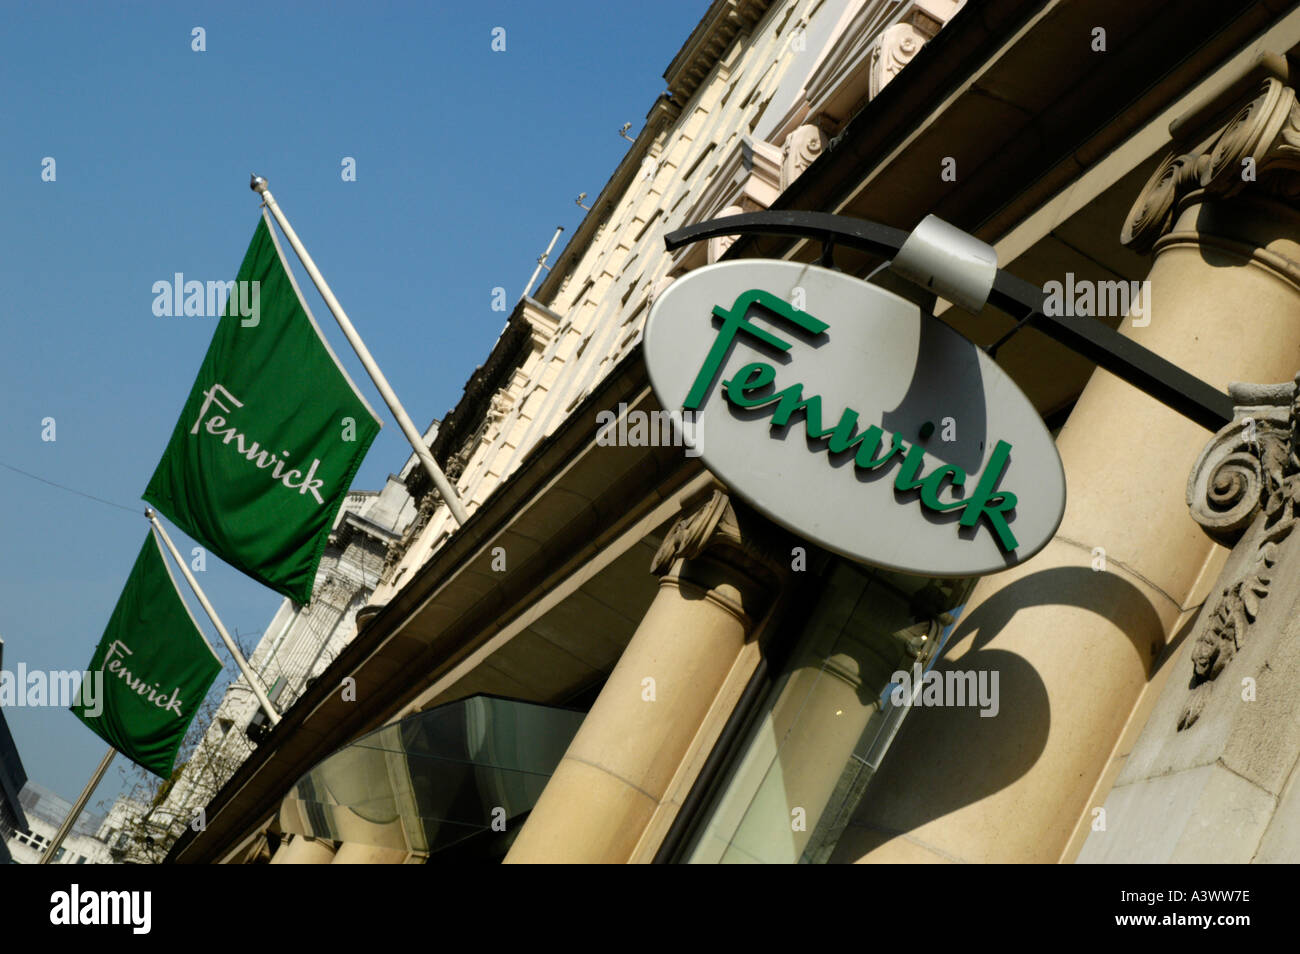 Fenwick department store, London England UK Stock Photo